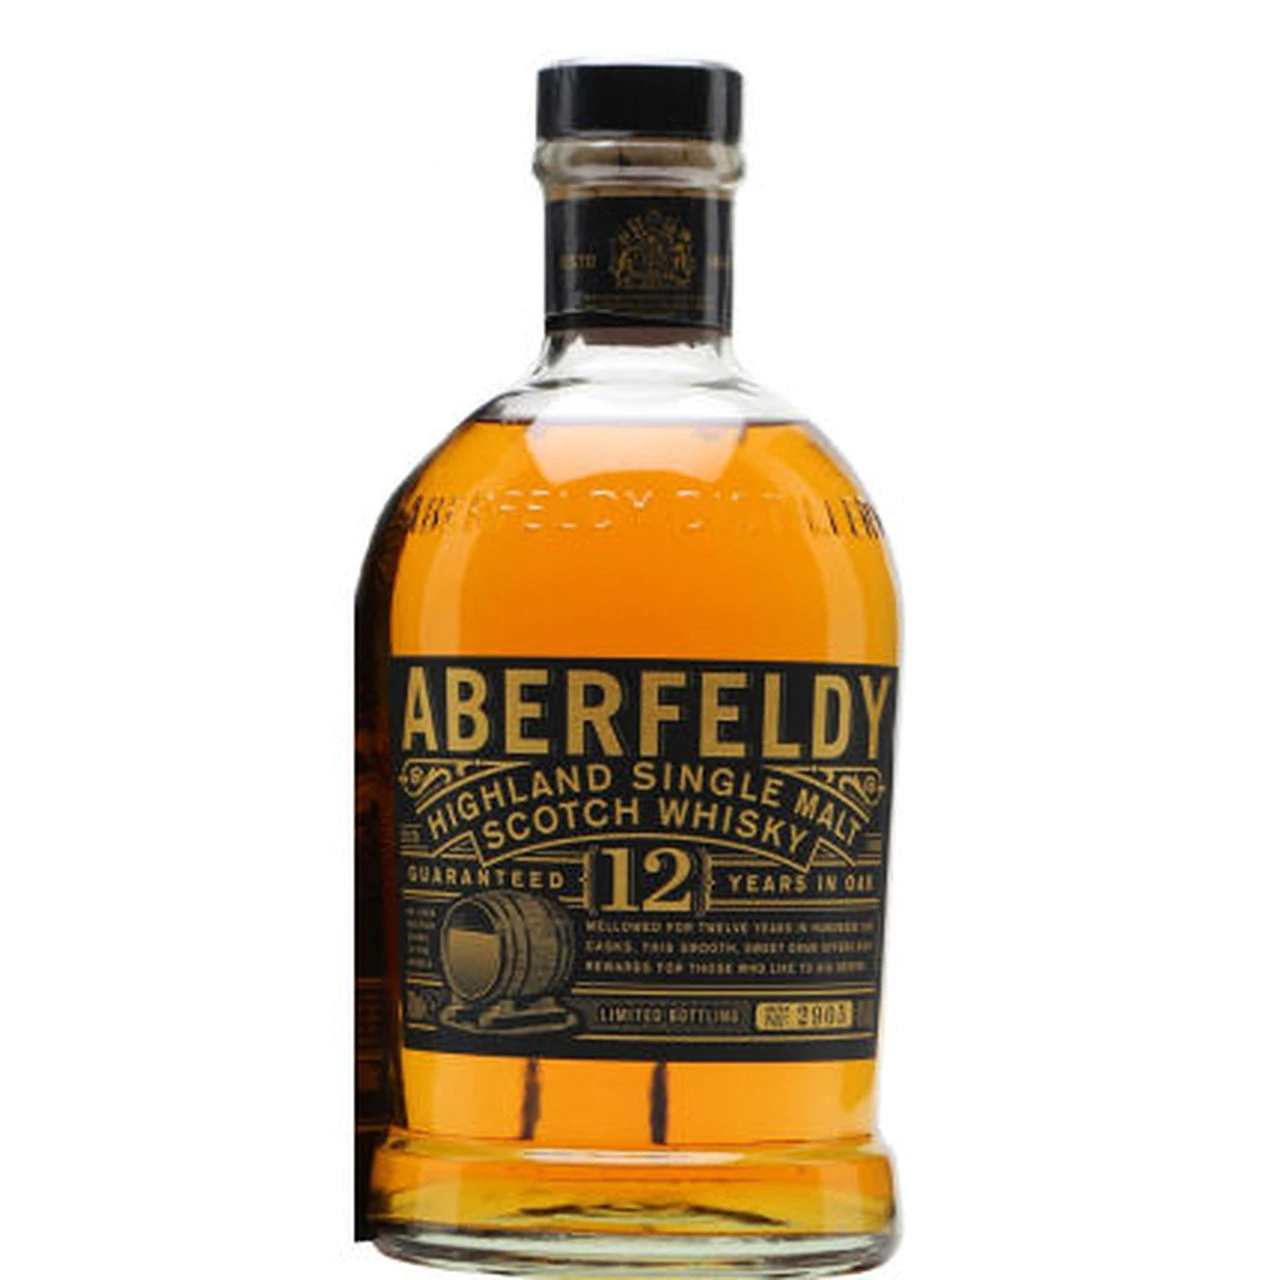 Highland single malt scotch whisky. Аберфелди 12. Виски Aberfeldy. Аберфелди 12 лет описание. Виски Tom.